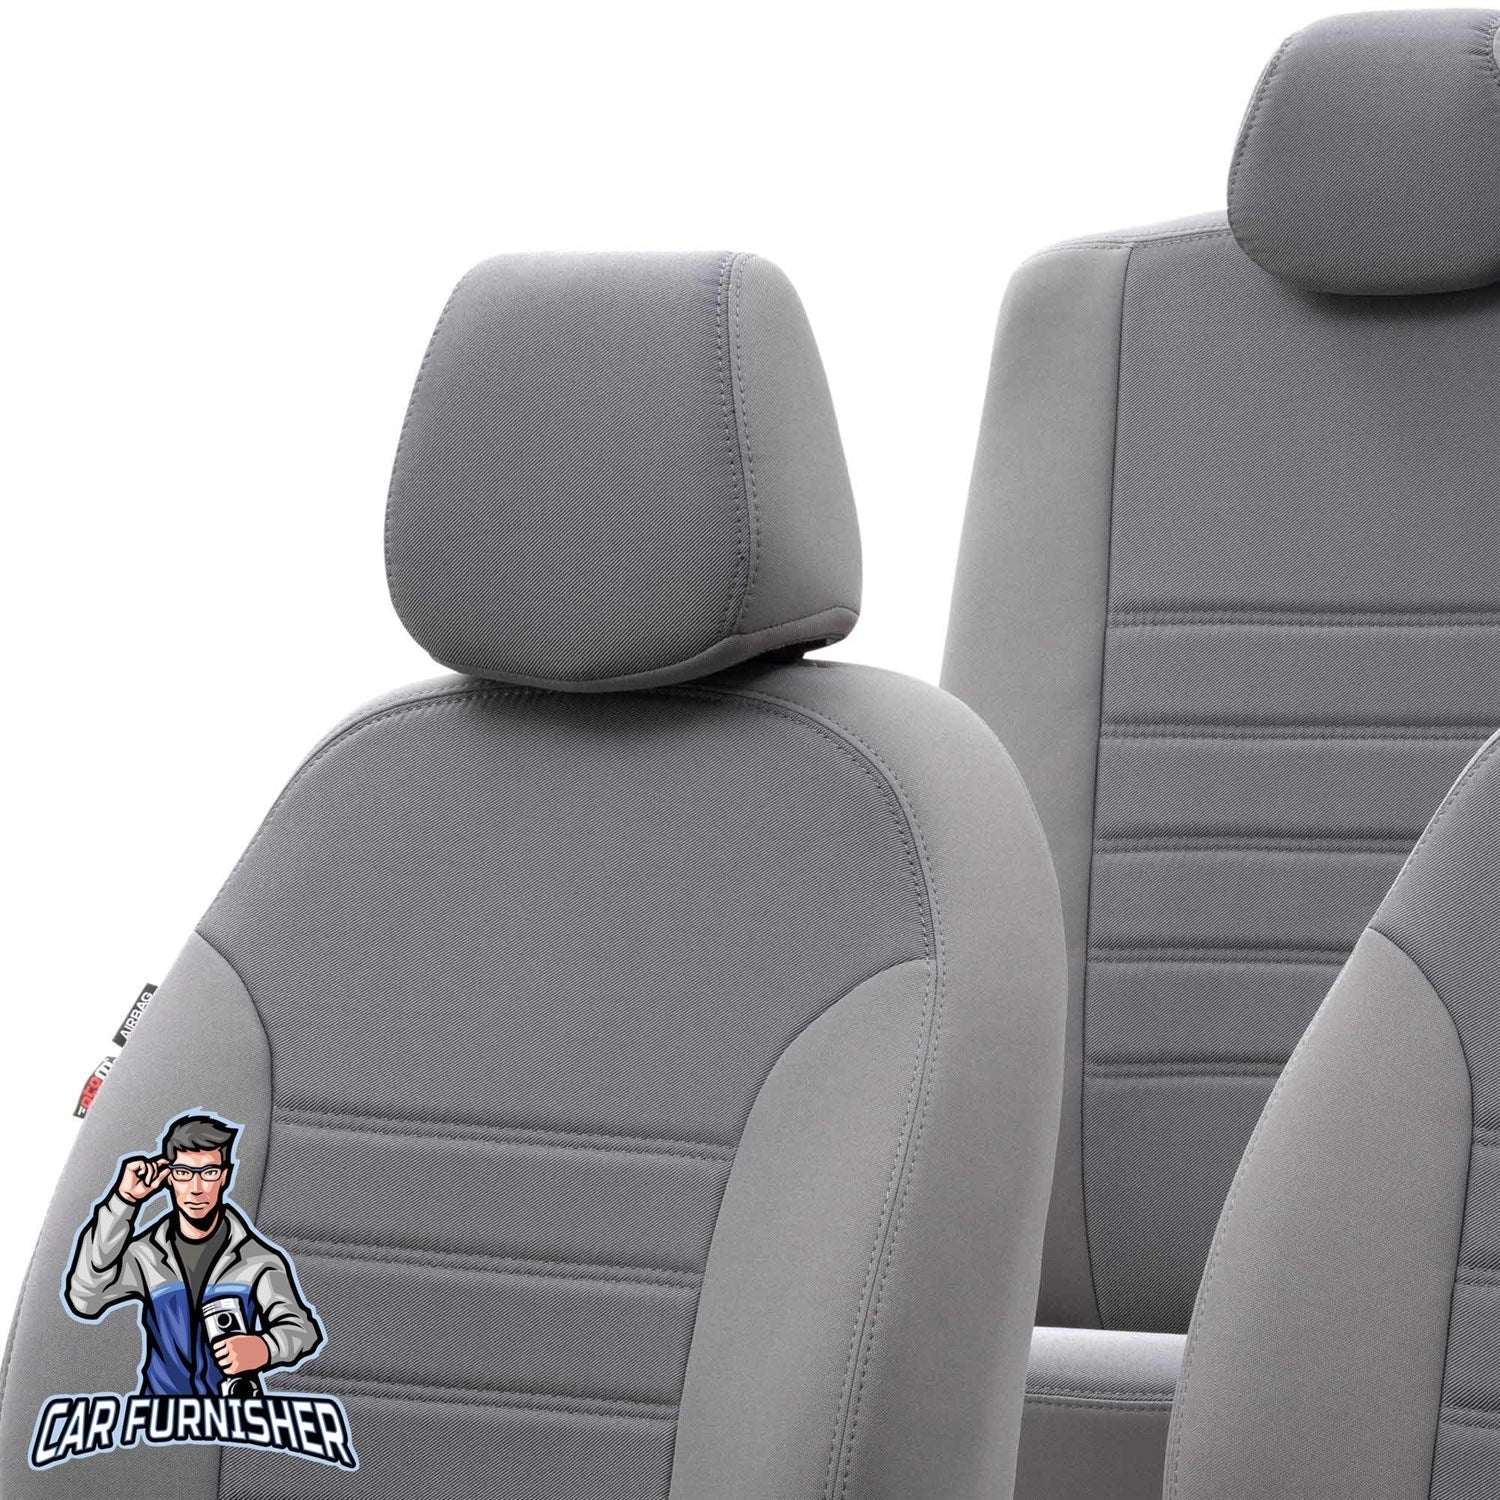 Volvo S90 Seat Cover Original Jacquard Design Gray Jacquard Fabric